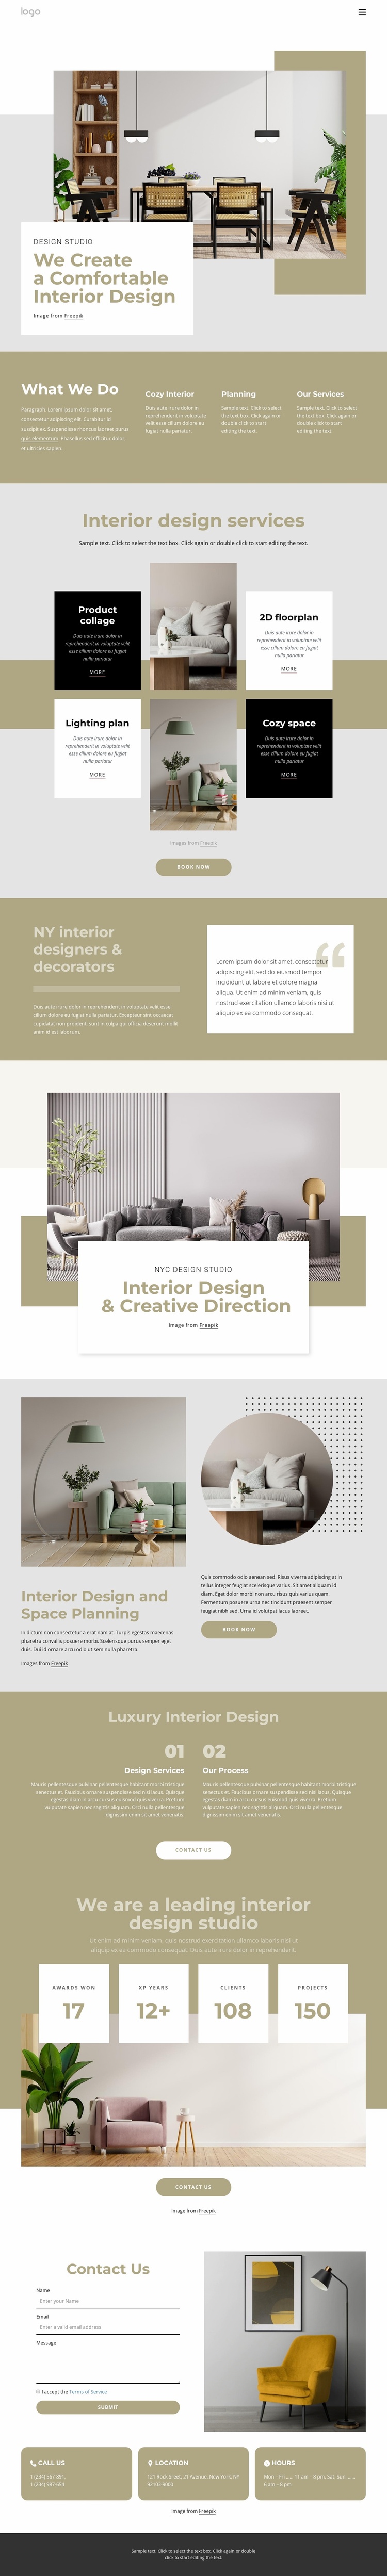 We create a comfortable interiors Website Template